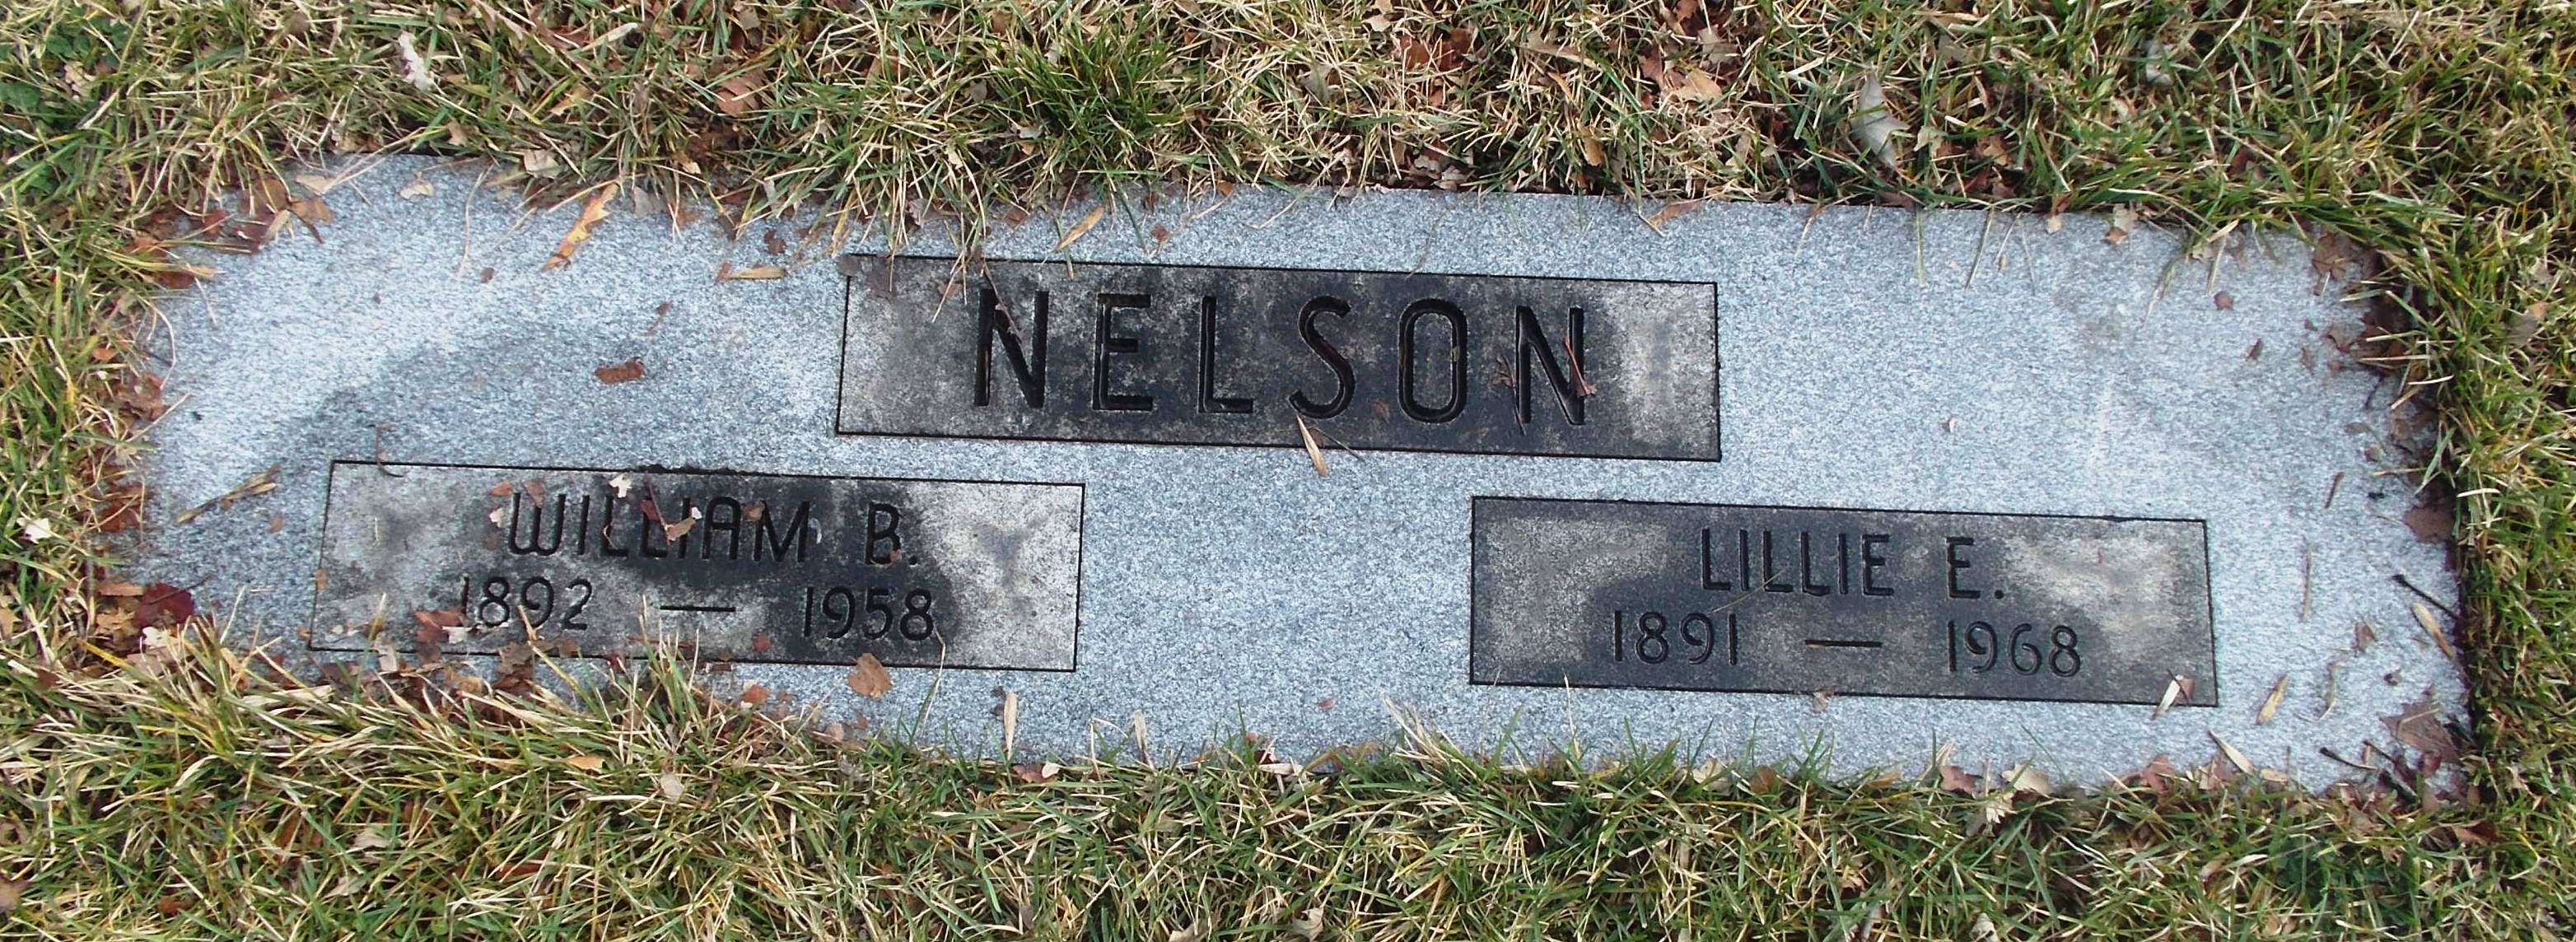 William B Nelson